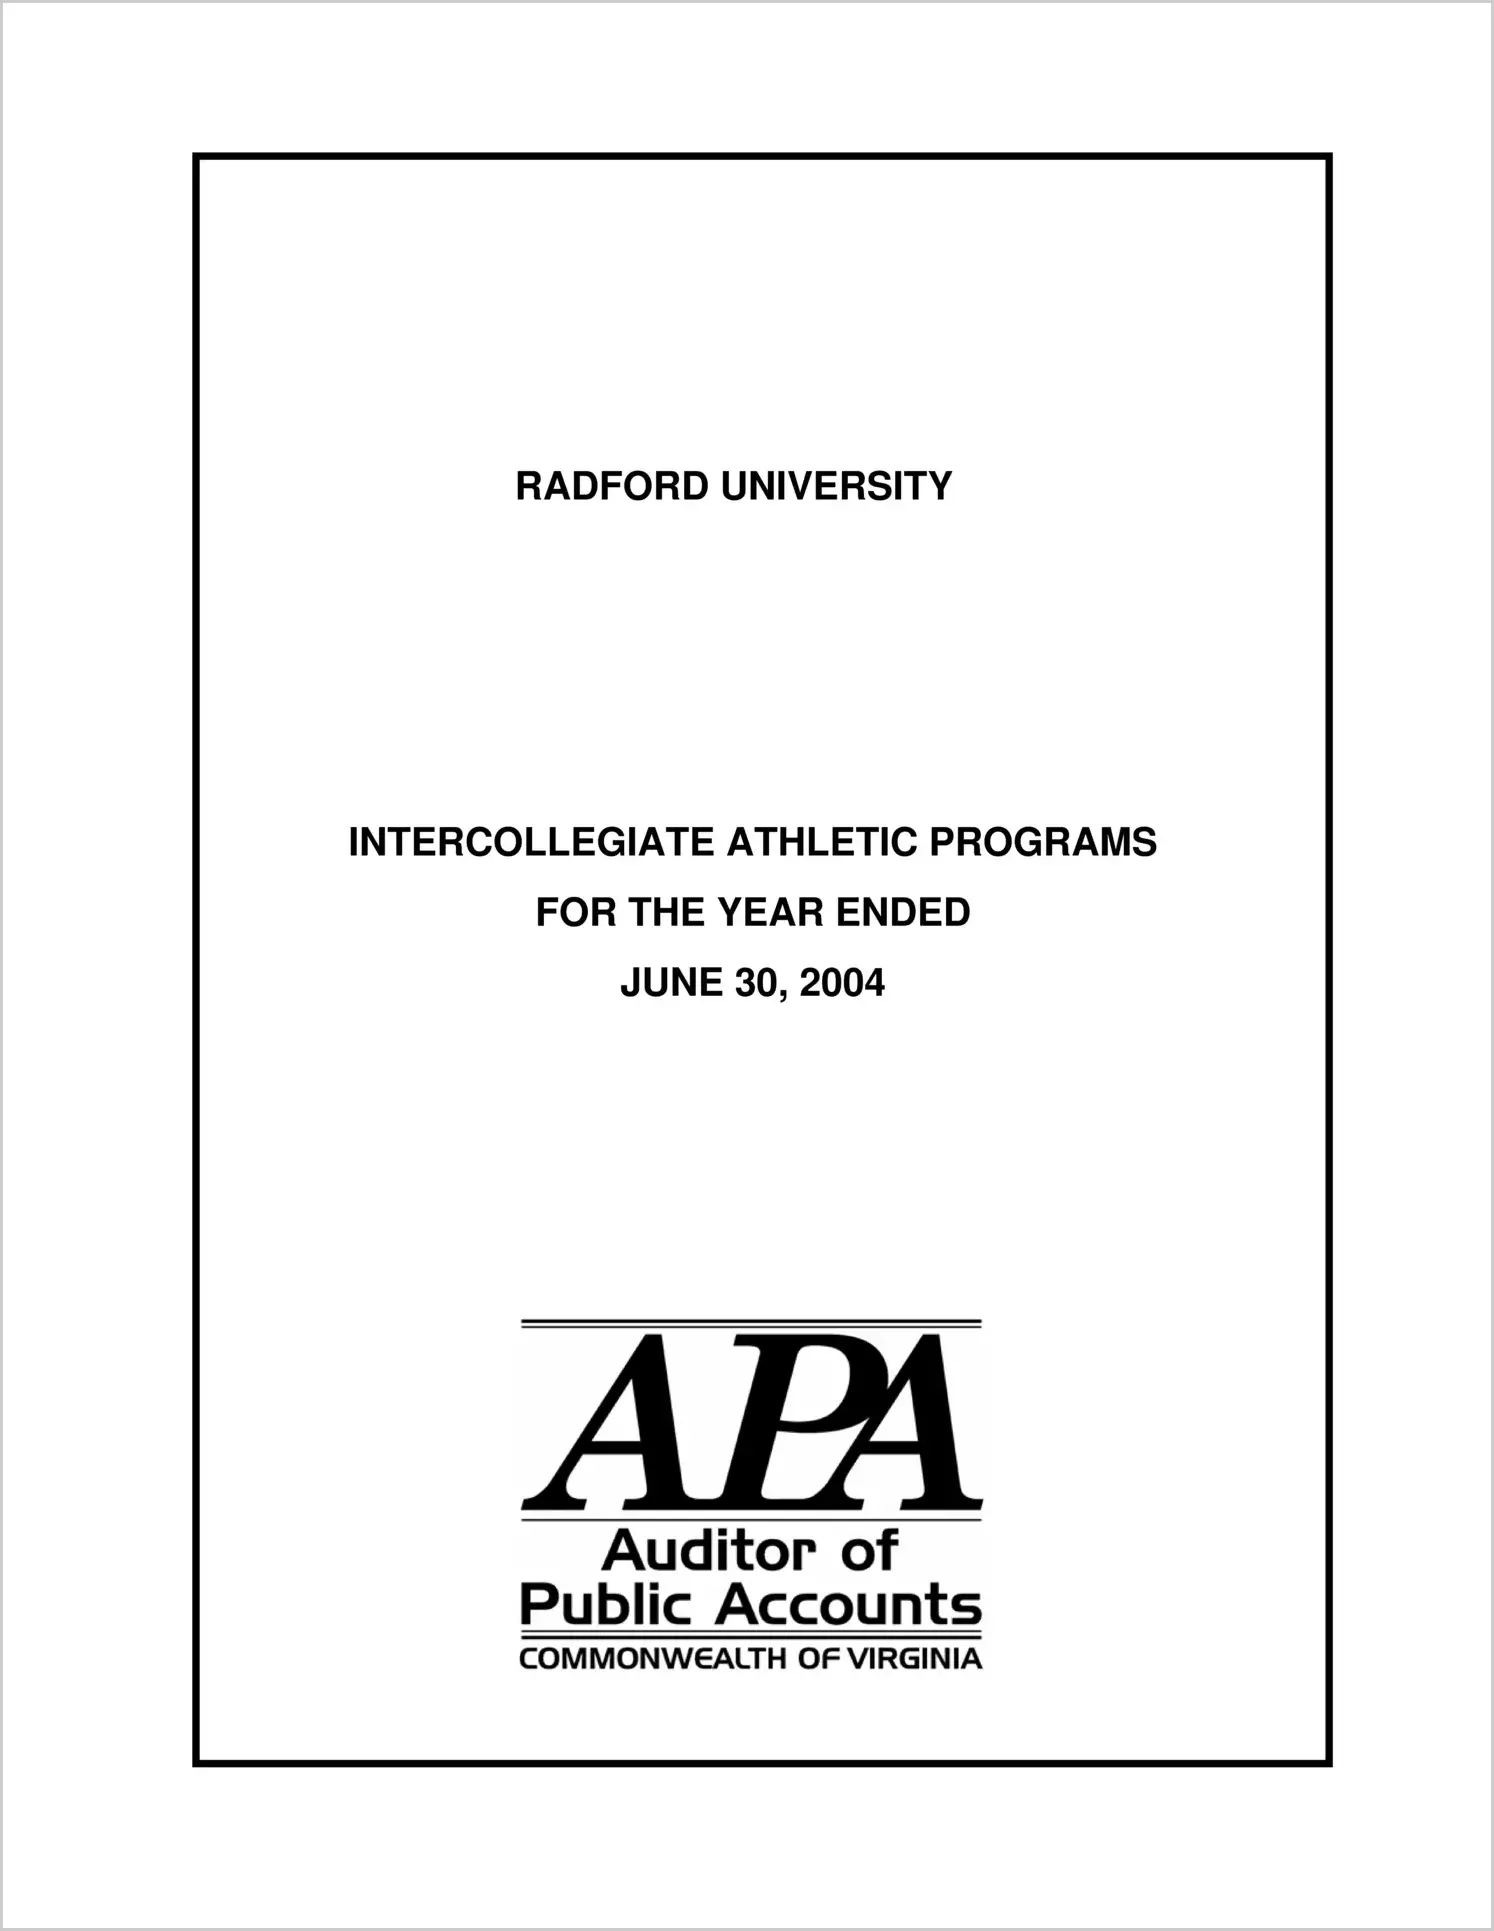 Radford University Intercollegiate Athletic Programs for the year ended June 30, 2004